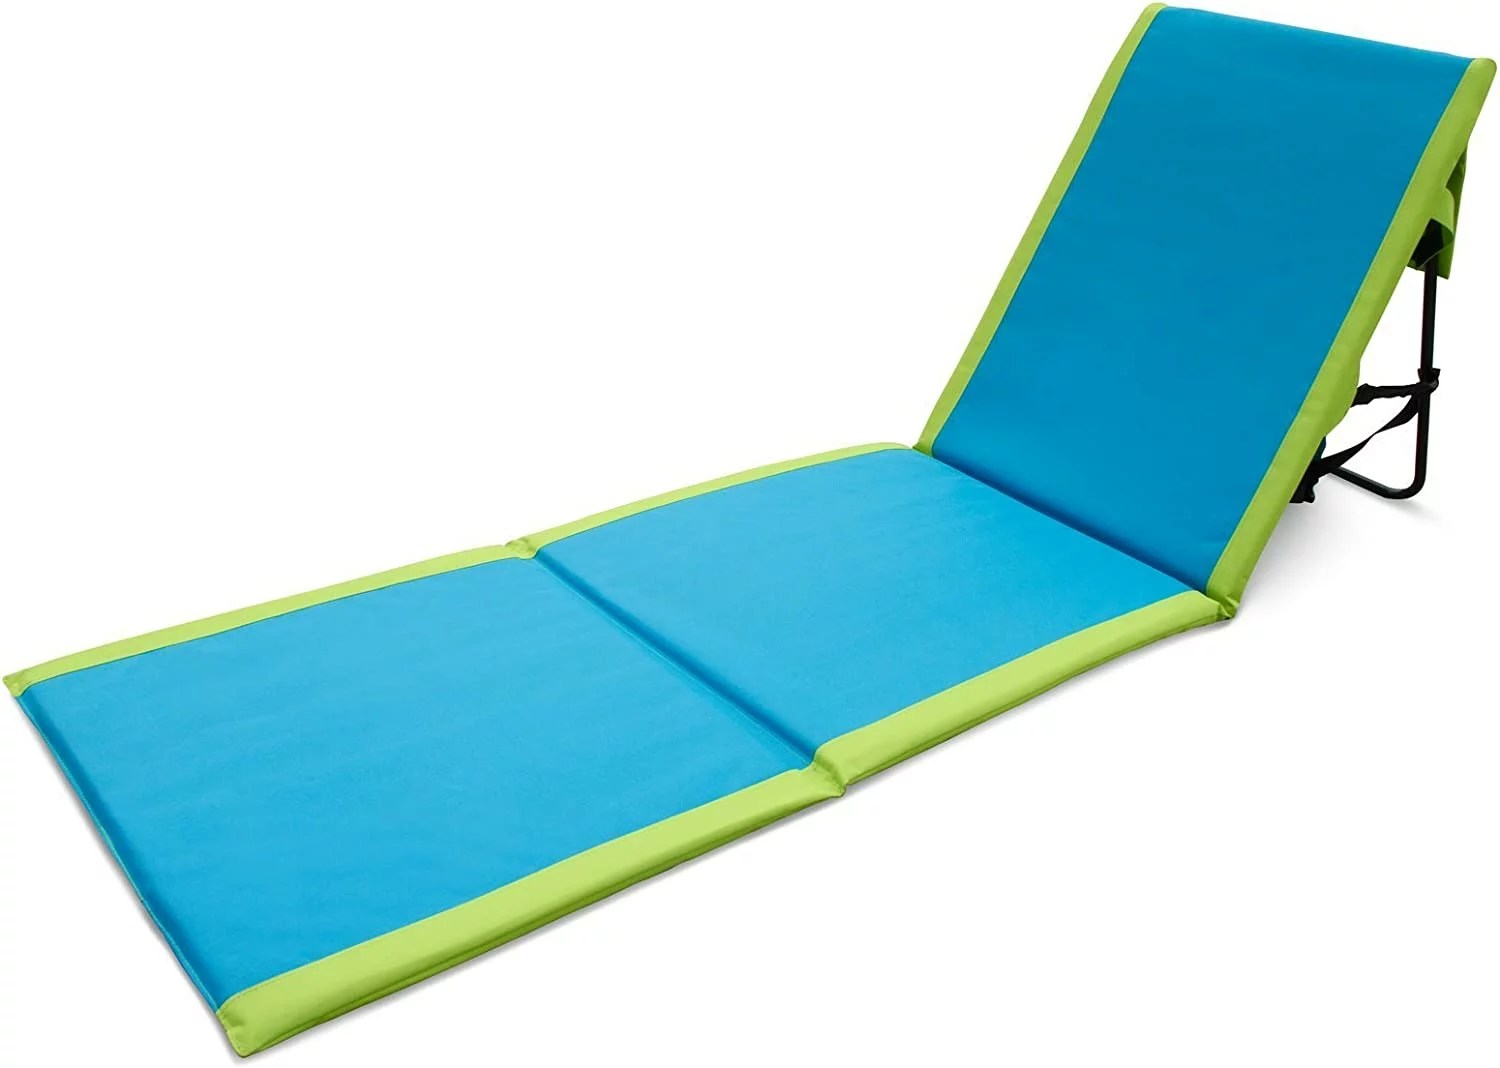 Pacific Breeze Lounger, best beach chairs